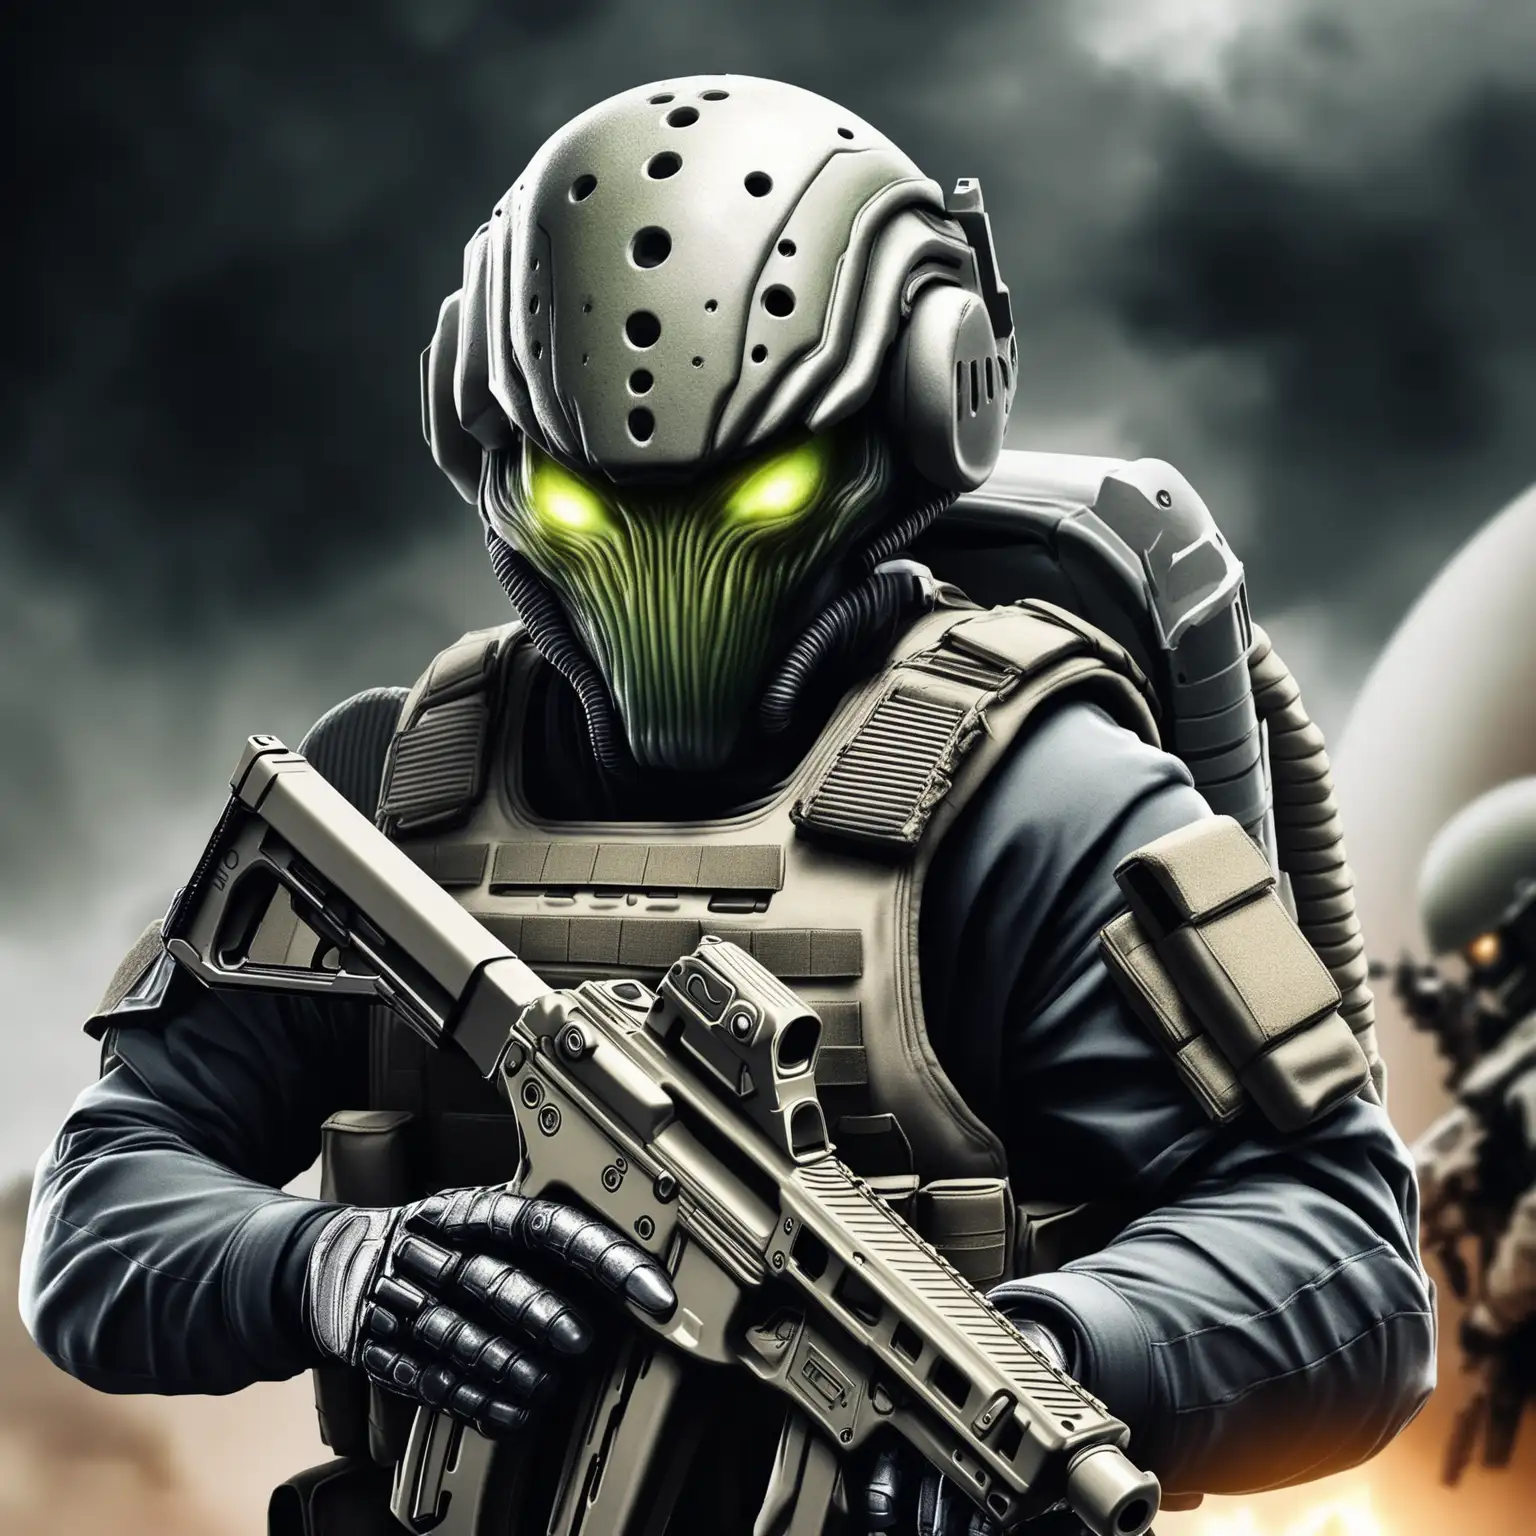 Tactical Alien Warrior with Stern Gaze and Handgun